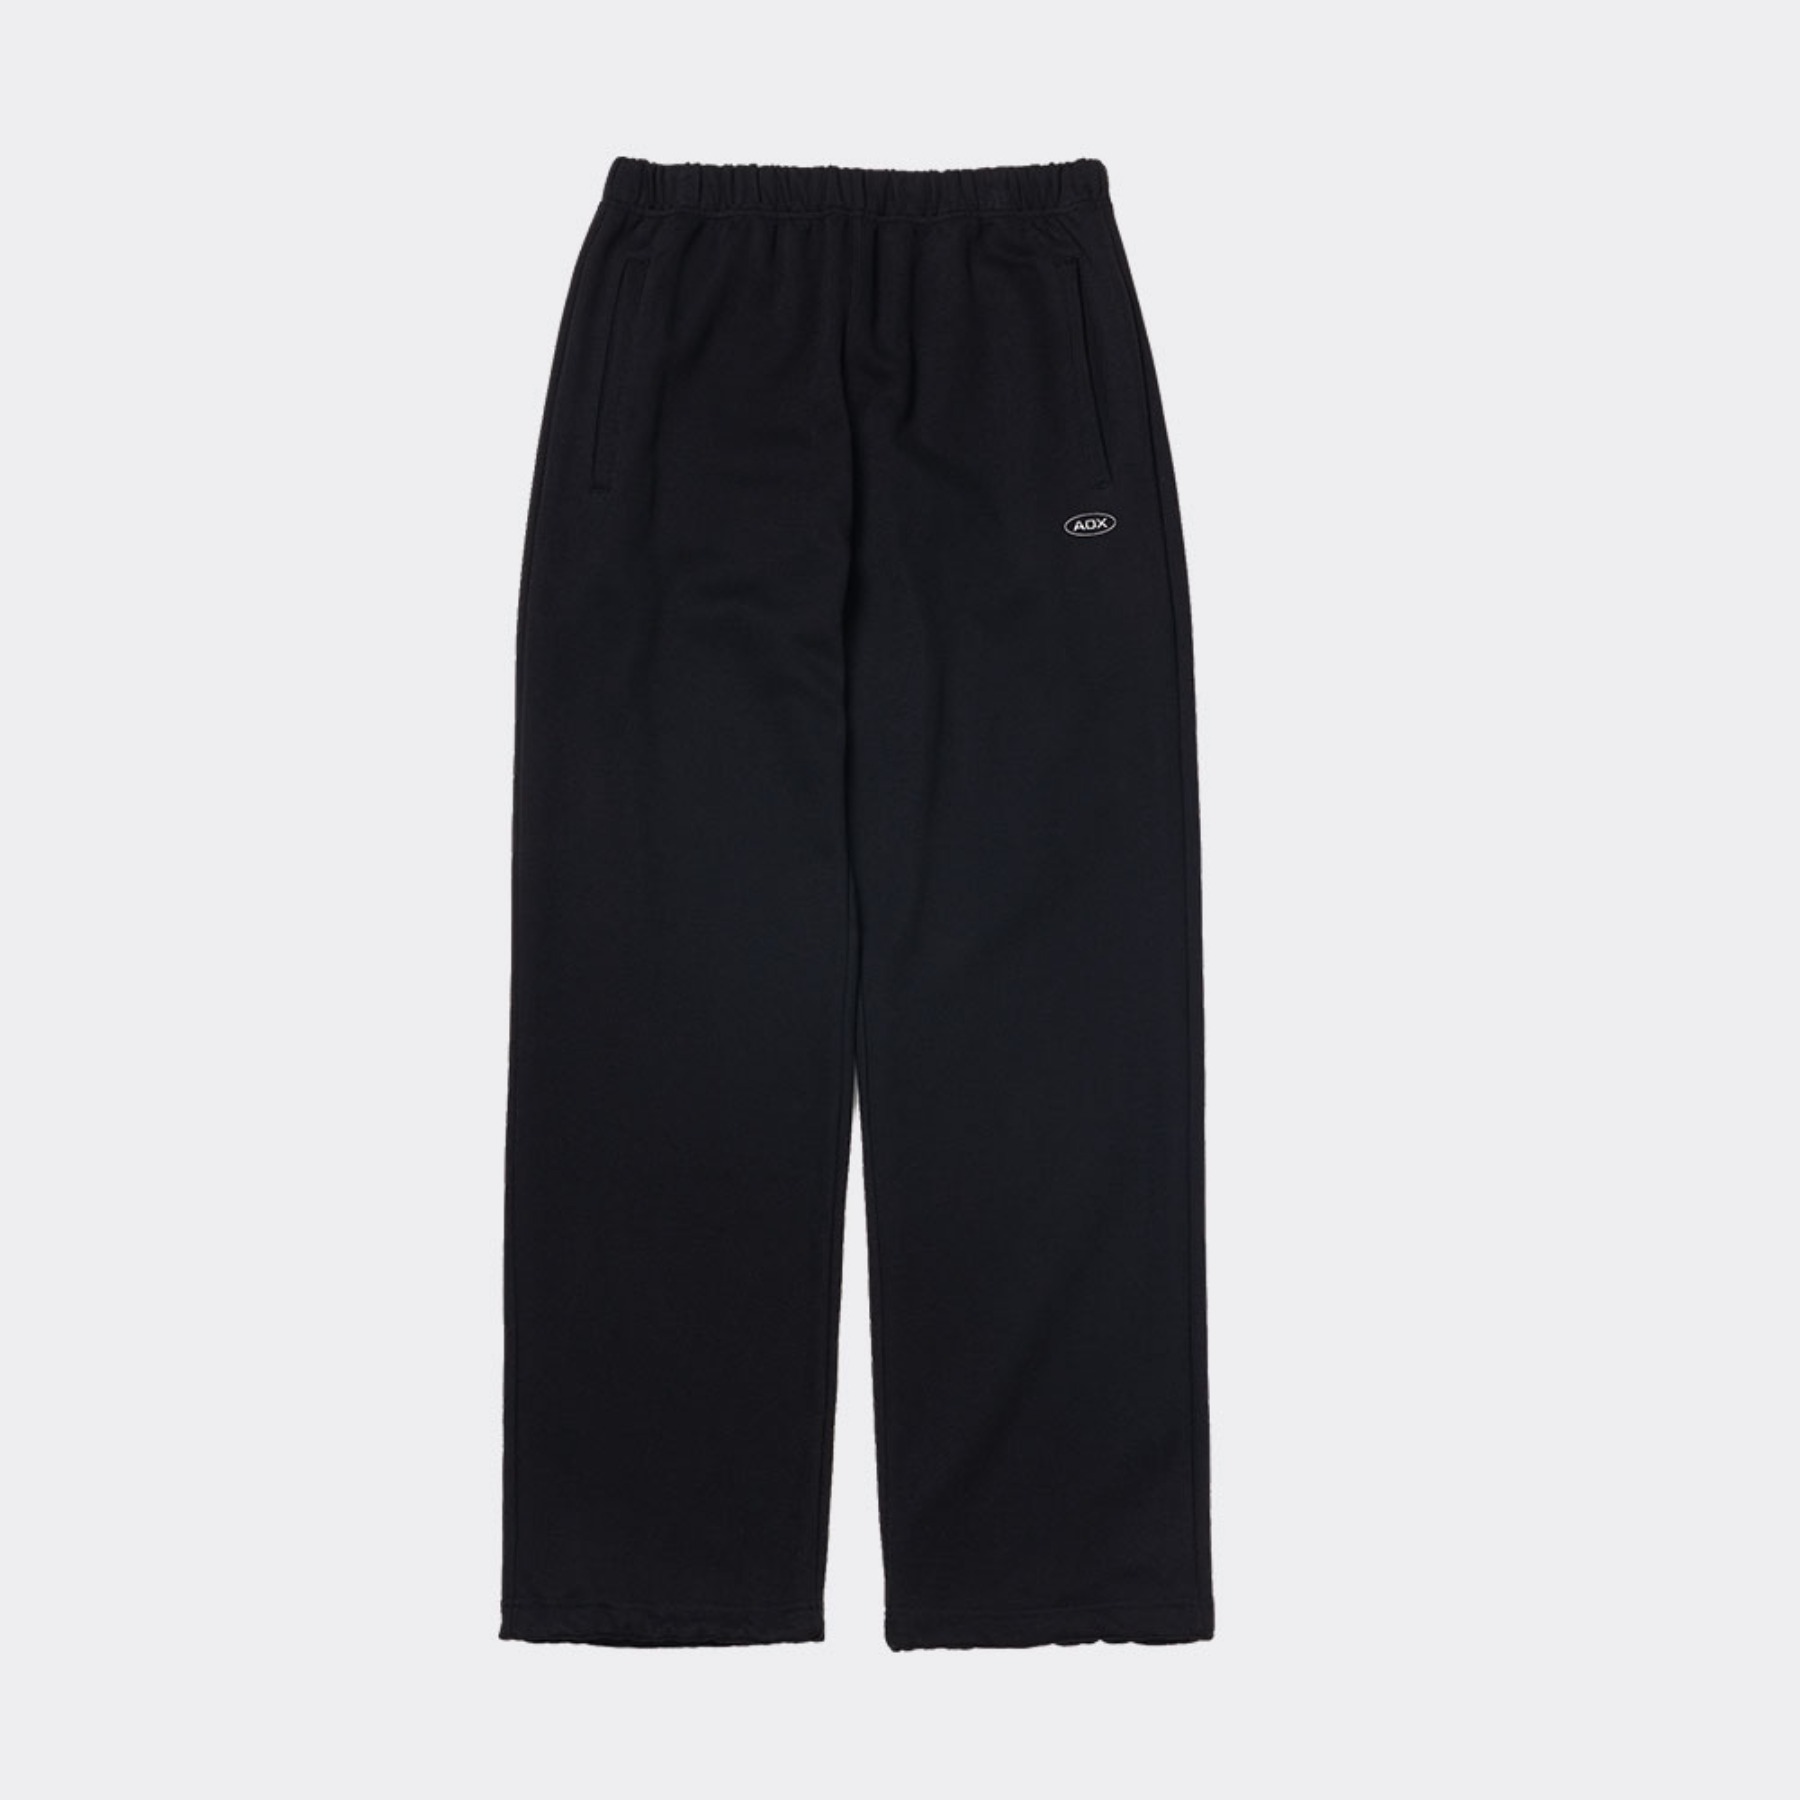 String-detailed Sweatpants (Black)